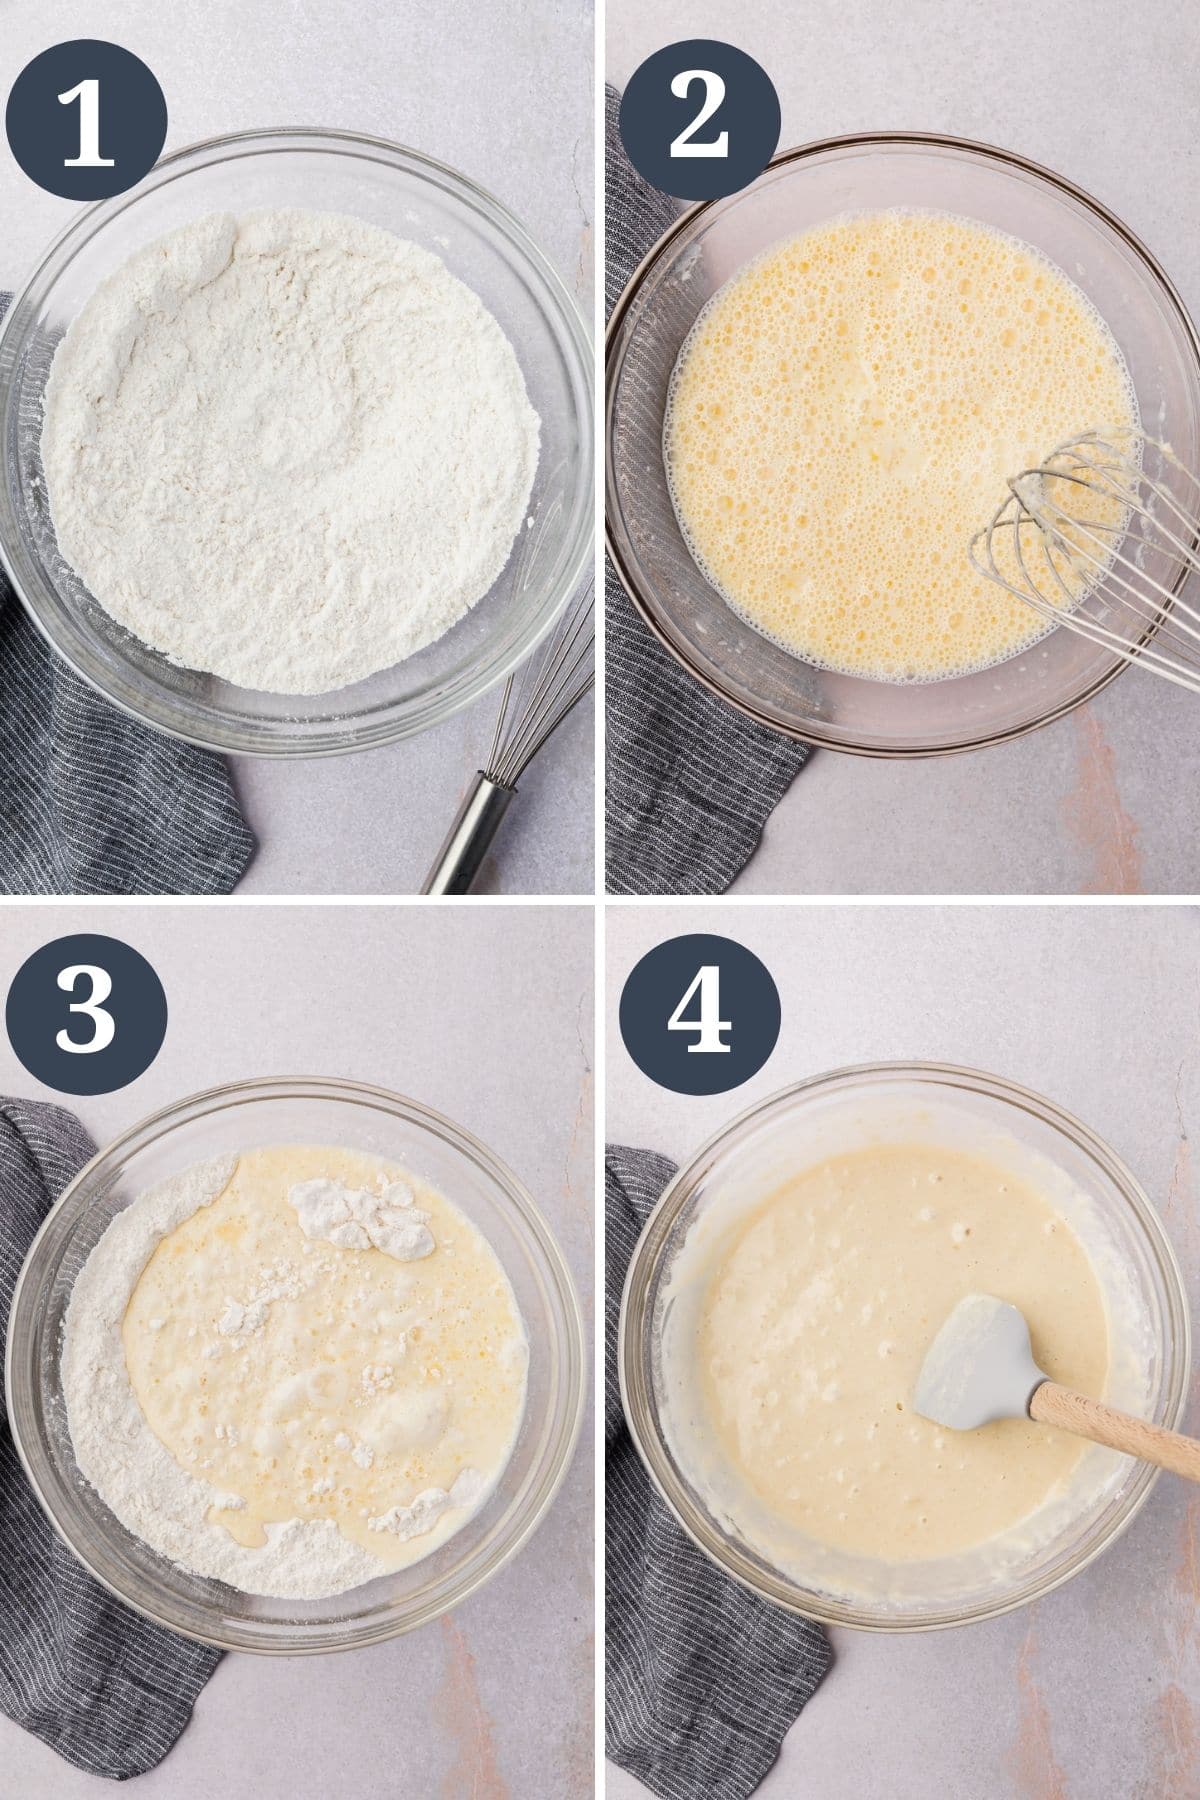 Steps 1-4 for making gluten-free pancakes.